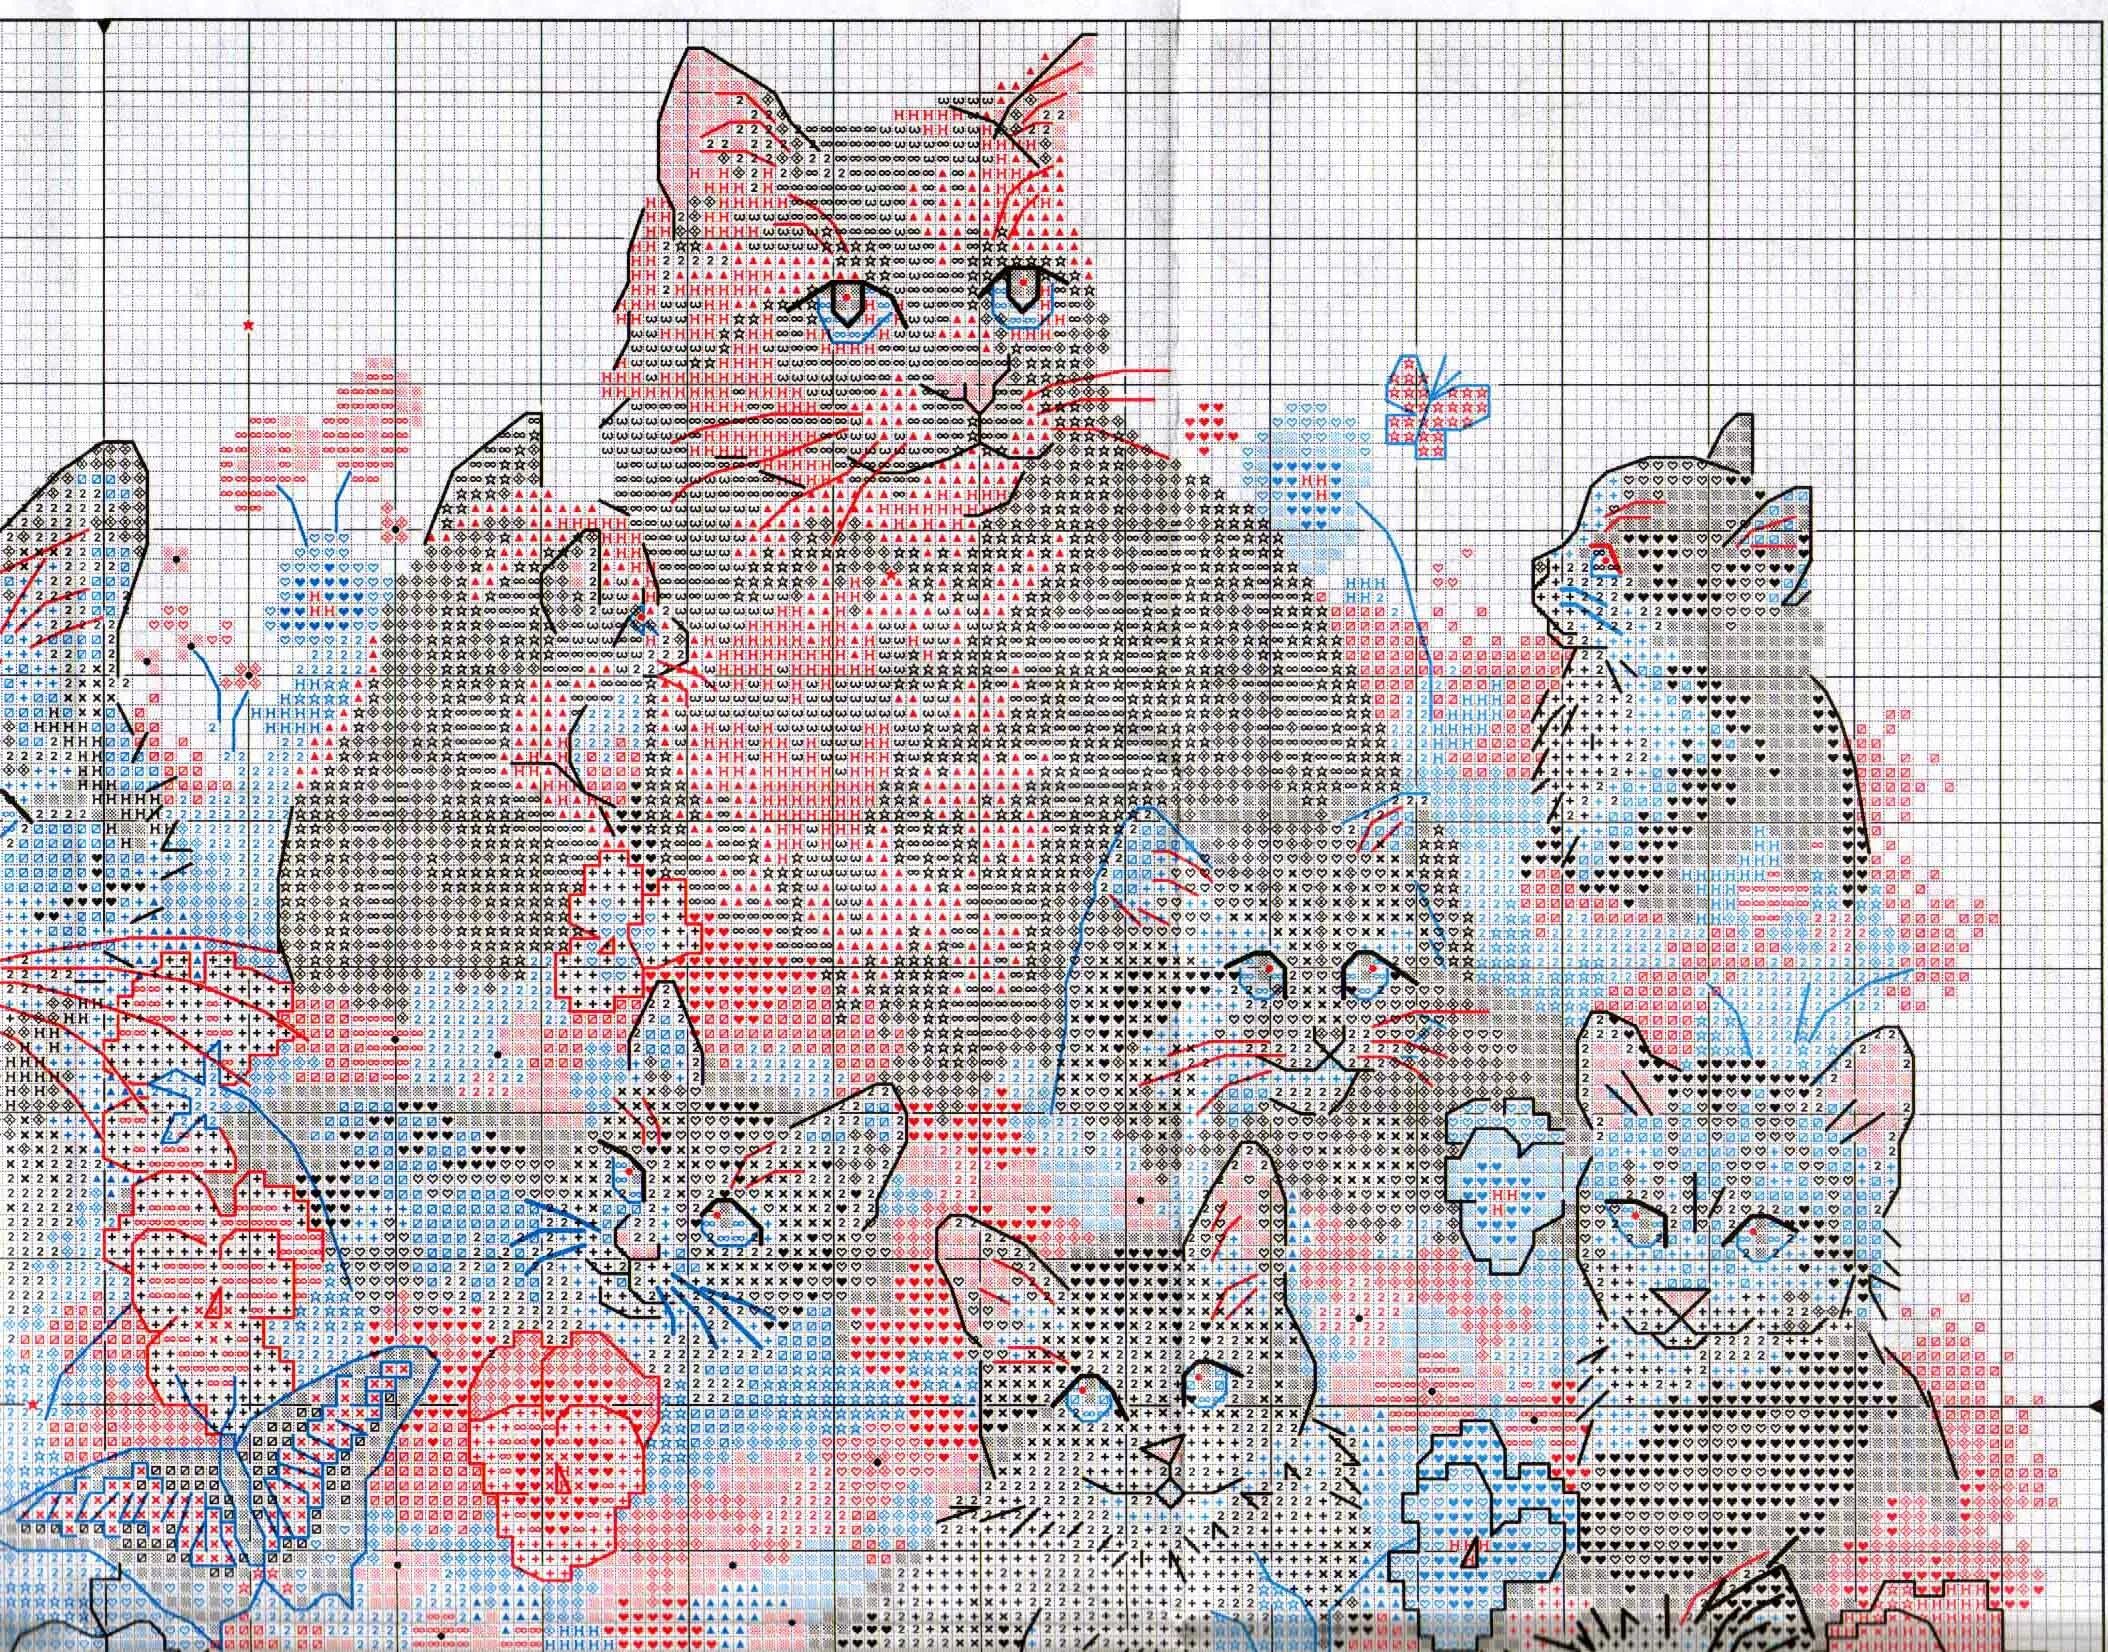 Dimensional chat group. Dimensions кот. Кошки вышивка от Дименшенс. Кот вышивка крестом Dimensions. Вышивка кот Dimension.